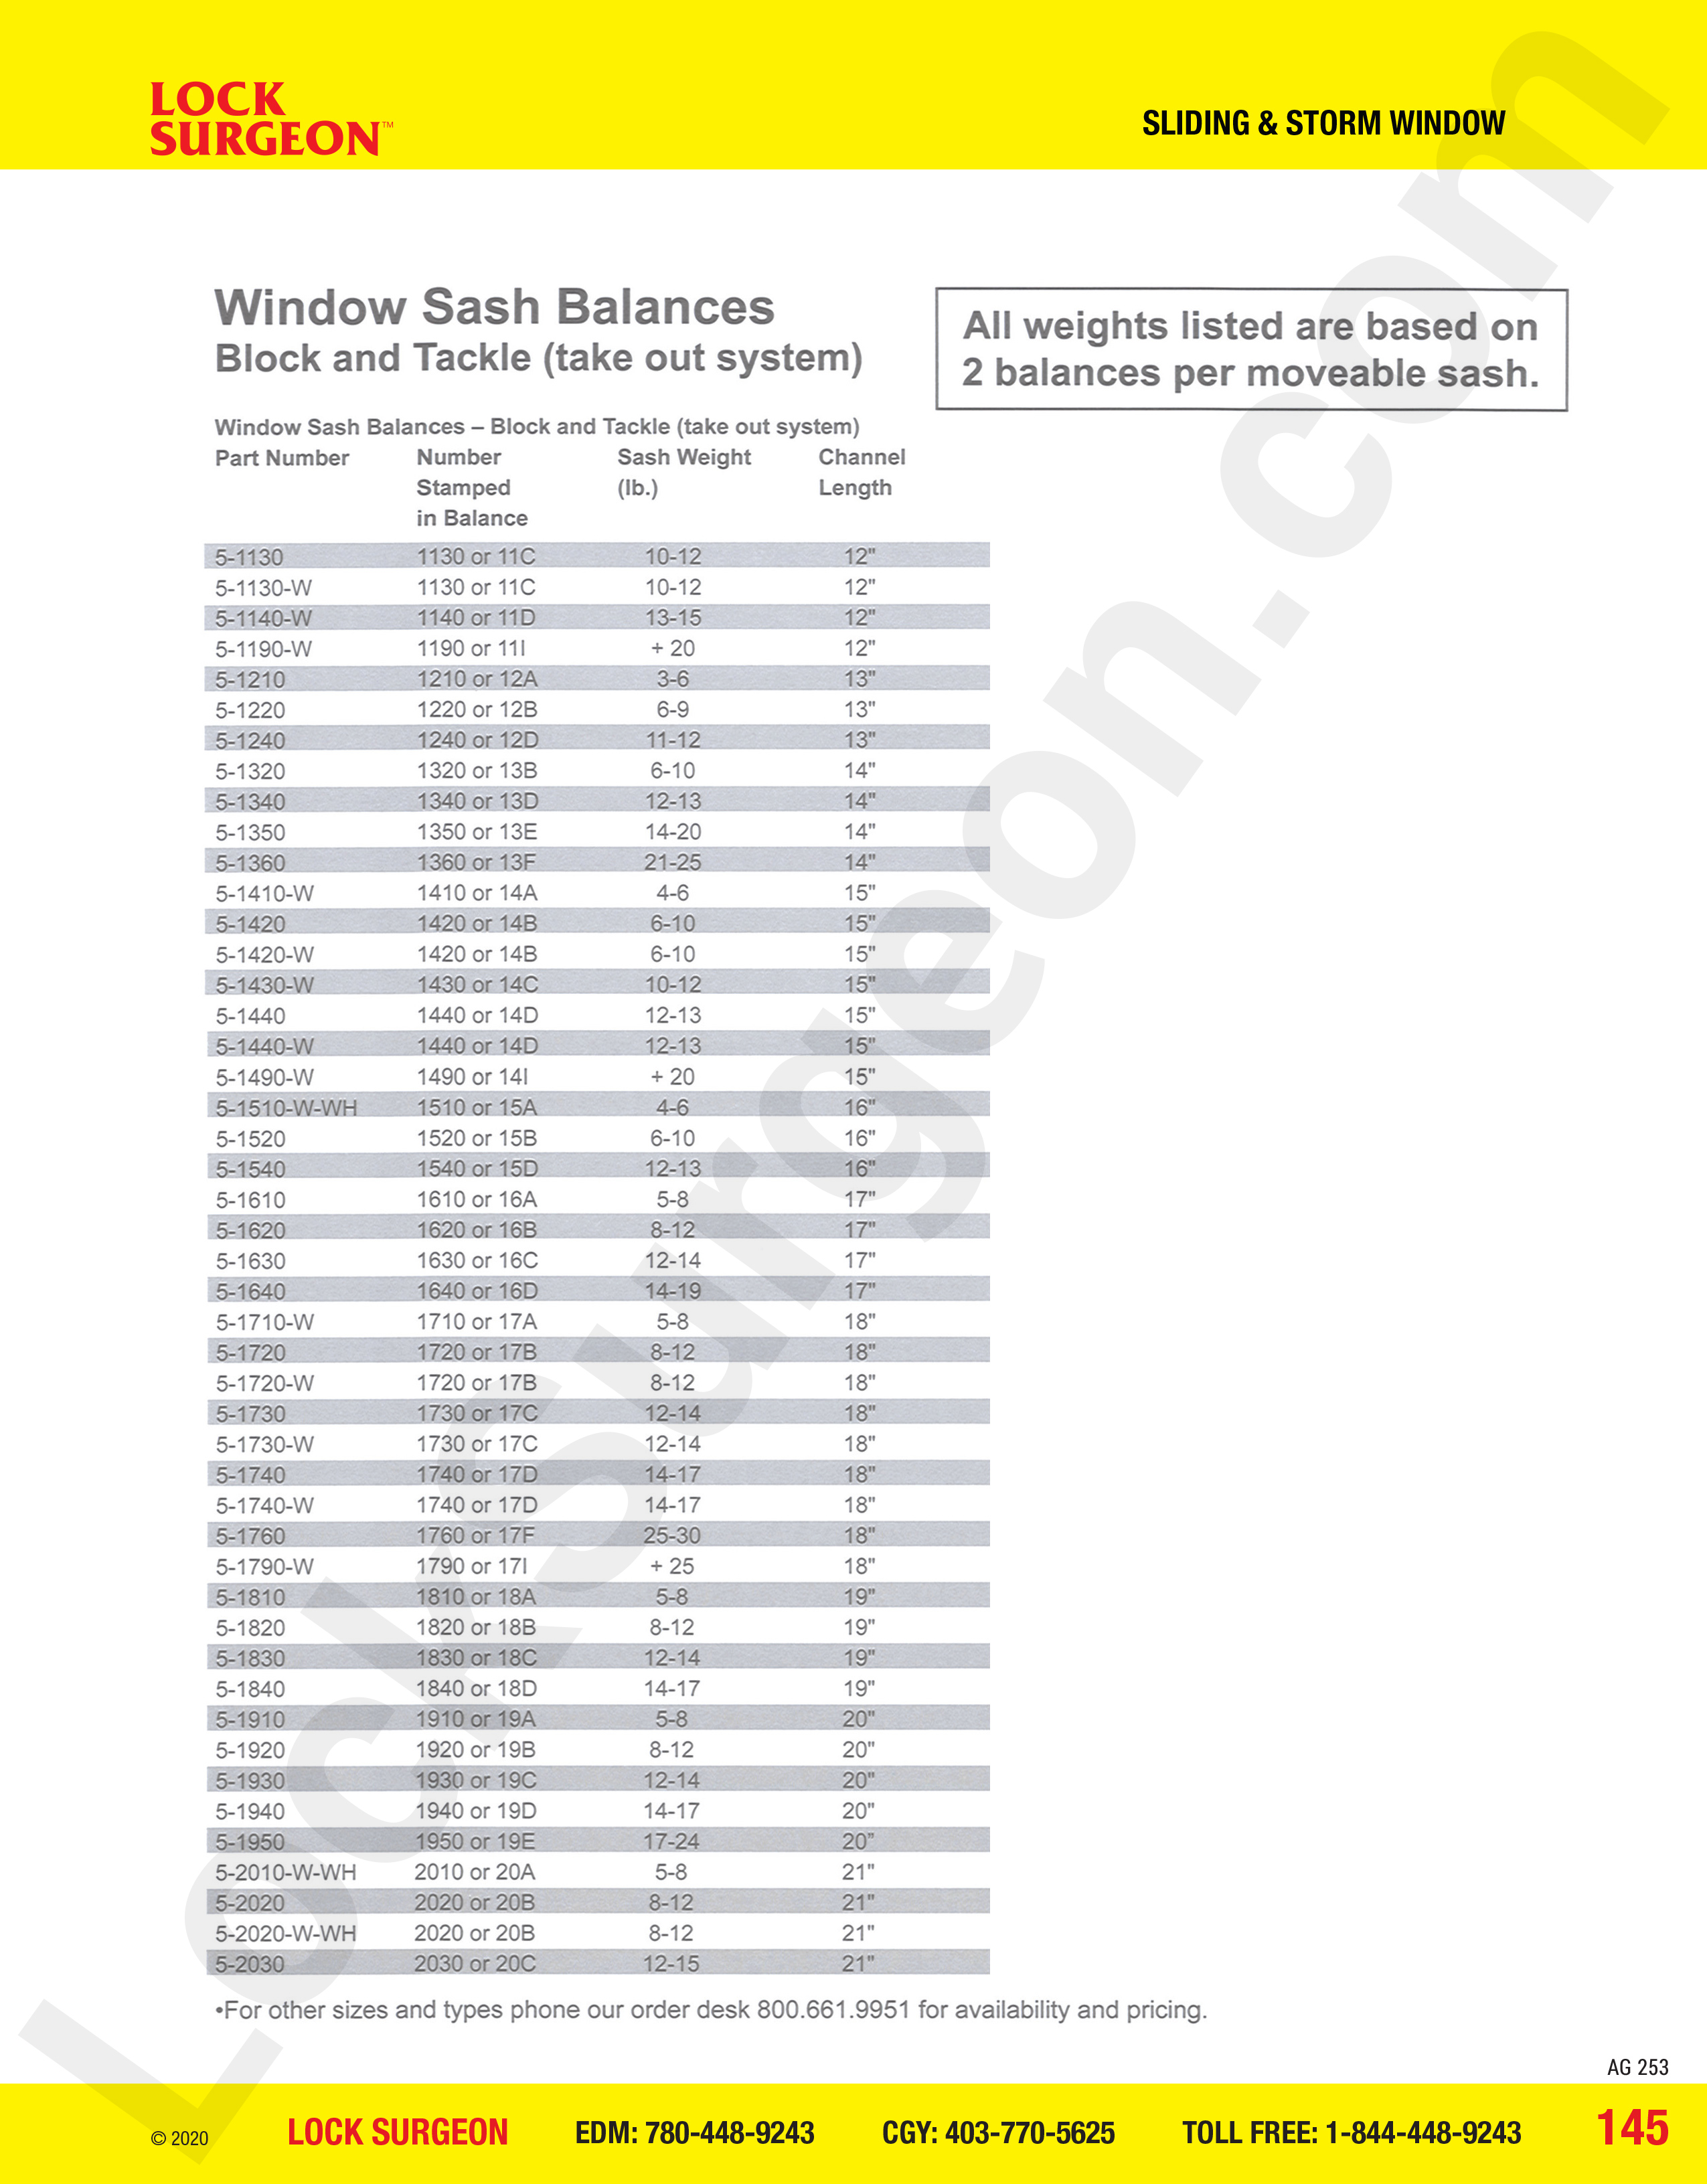 Sash balances & block & tackle for multiple sizes of sliding or storm windows at Lock Surgeon.